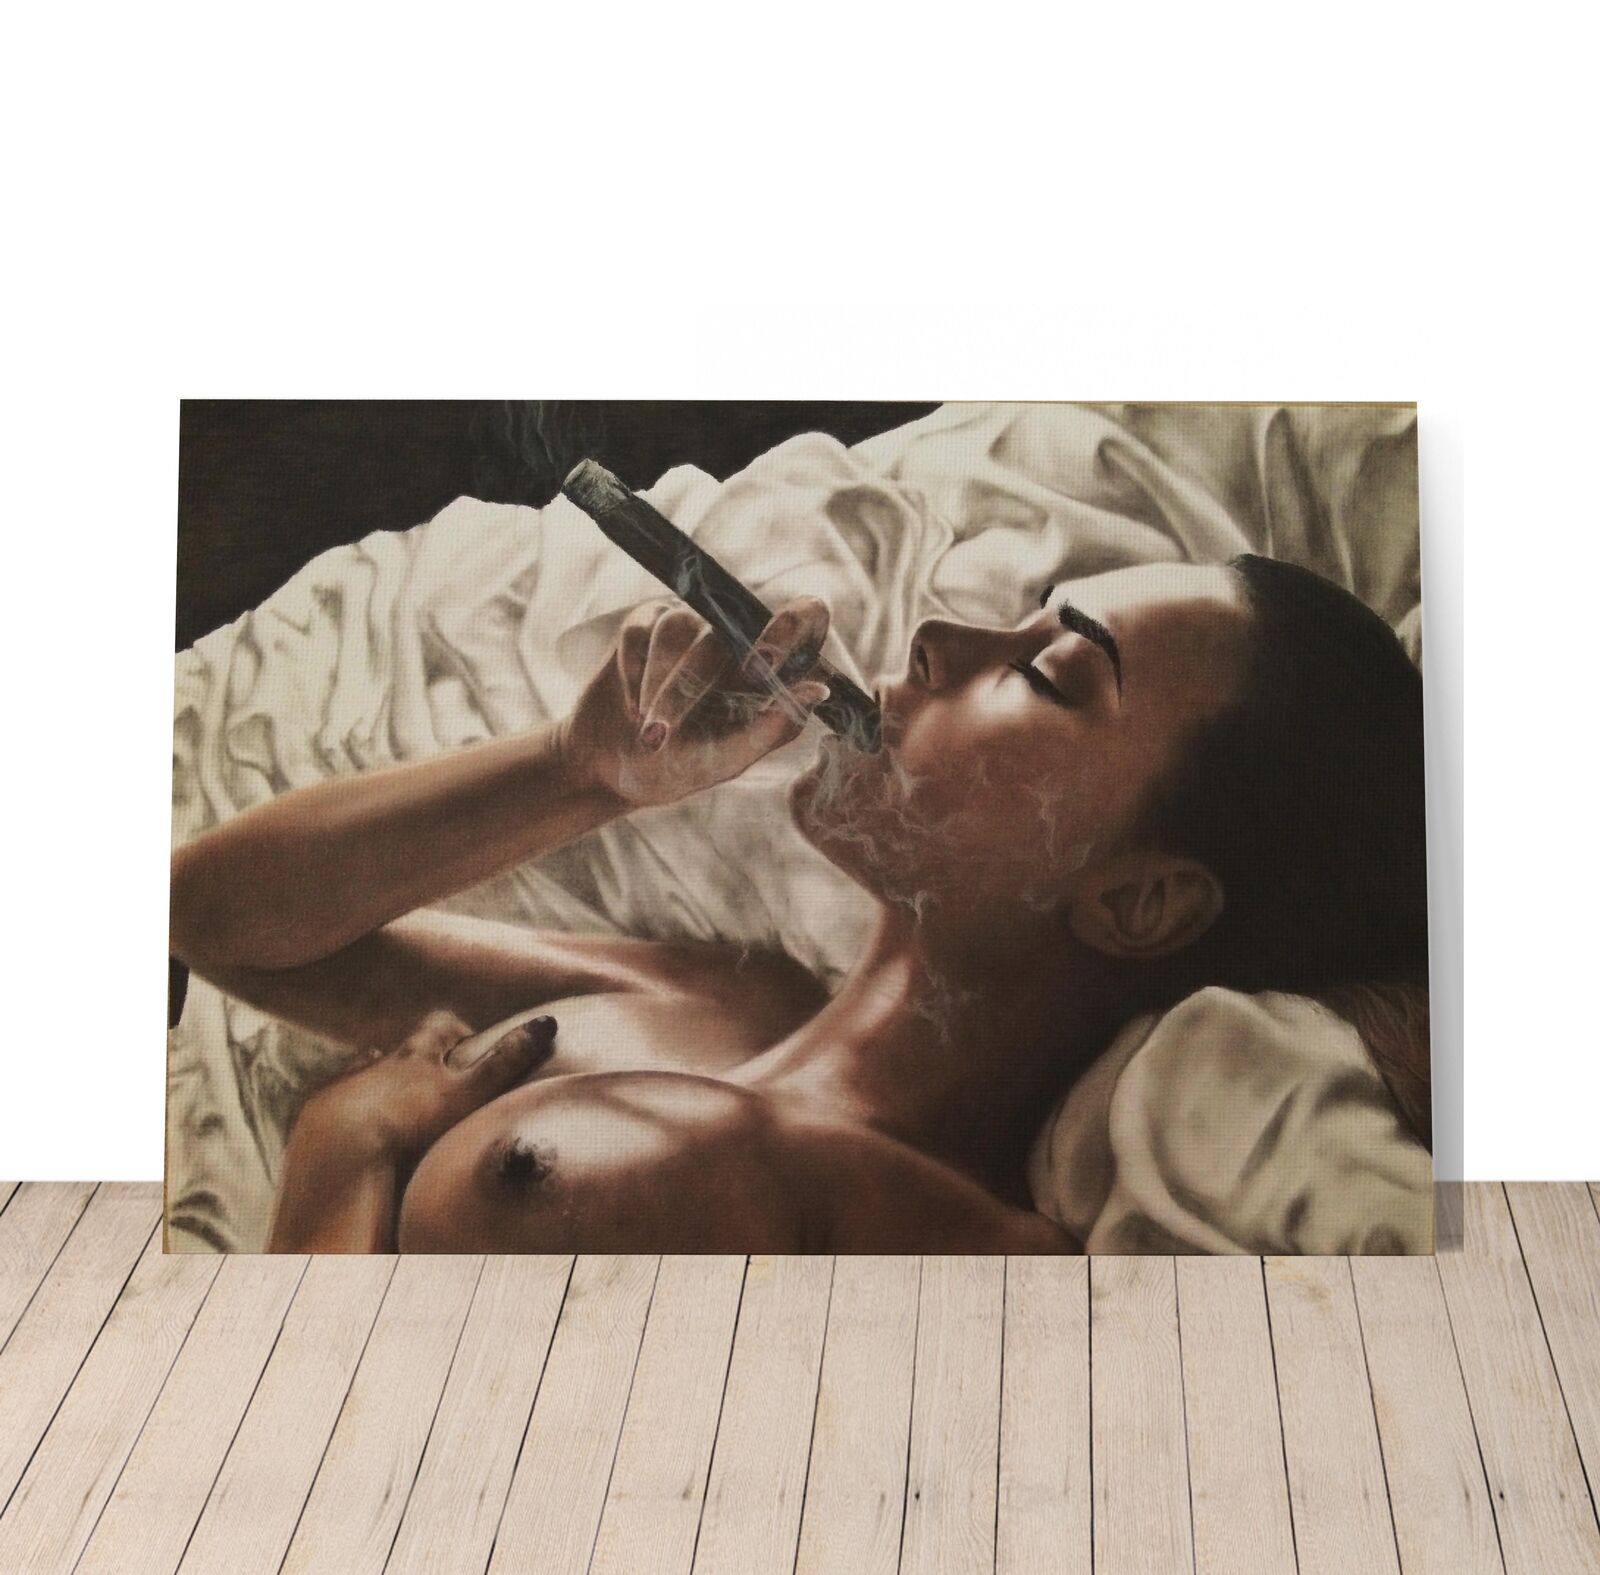 daniel berkowitz add photo naked teen smoking weed